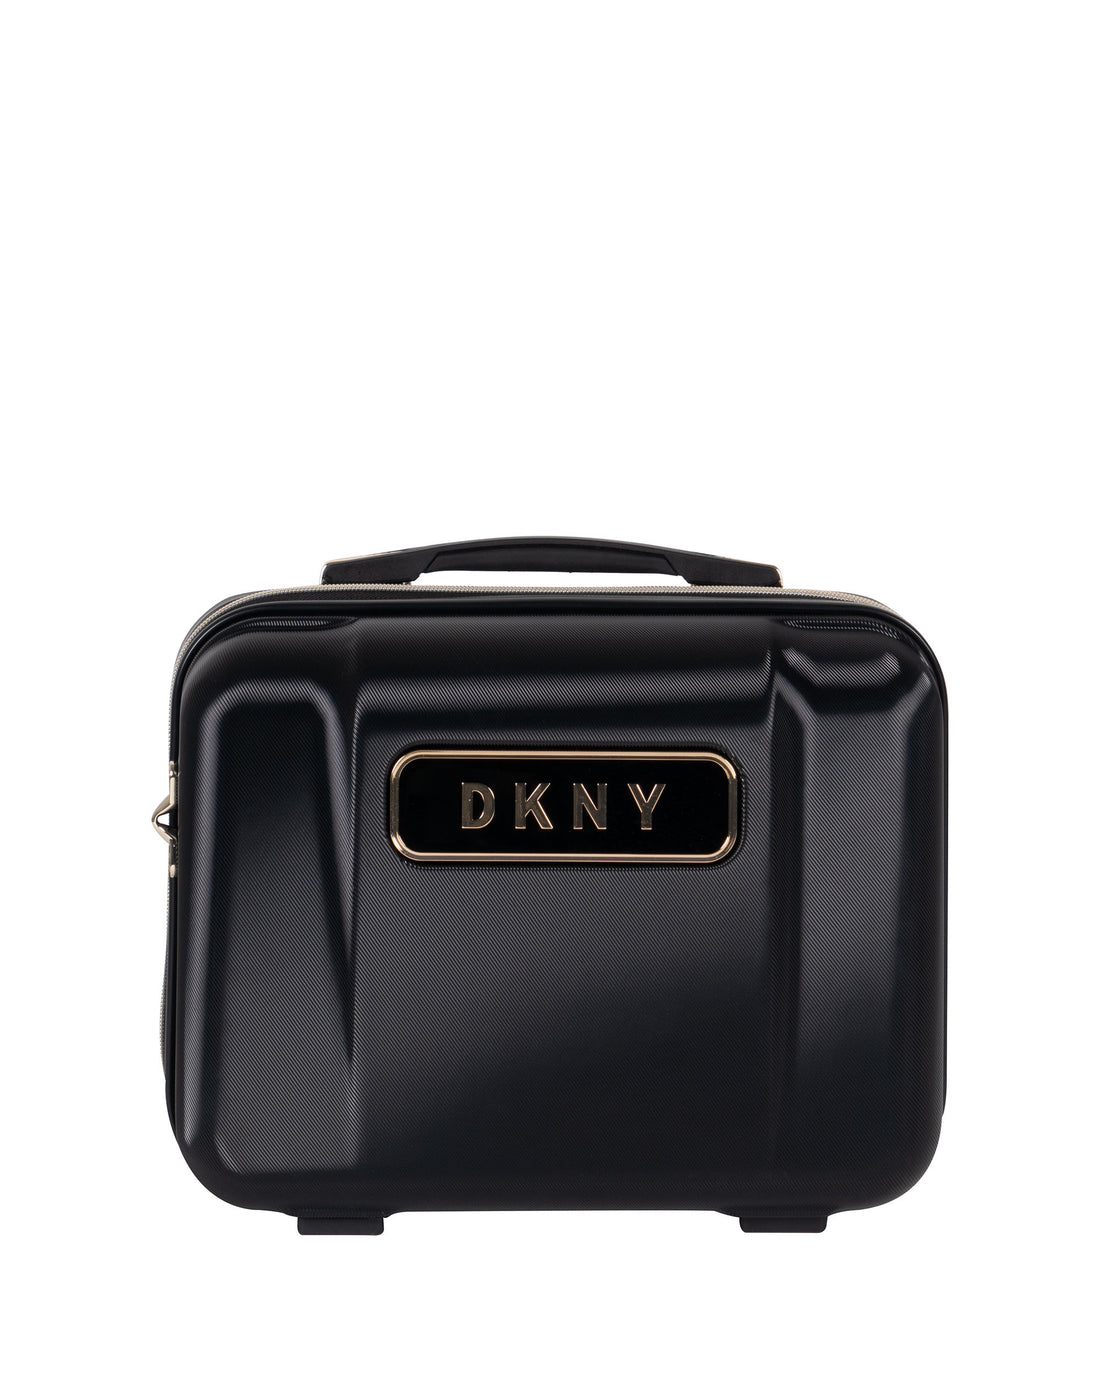 DKNY Black Beauty Case